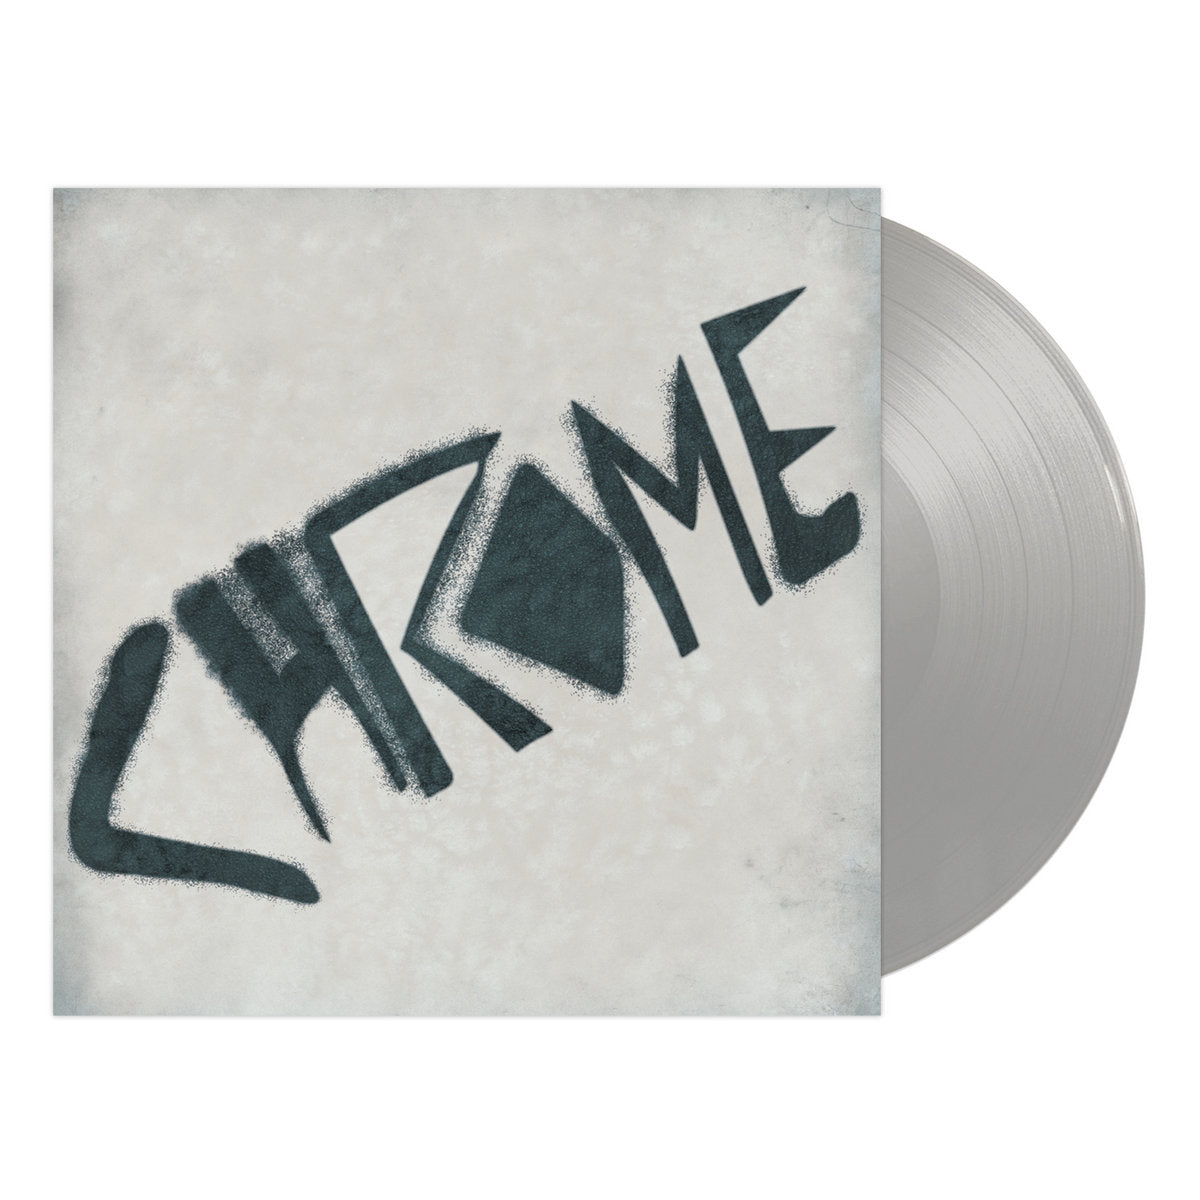 CHROME – The Visitation LP (silver vinyl)